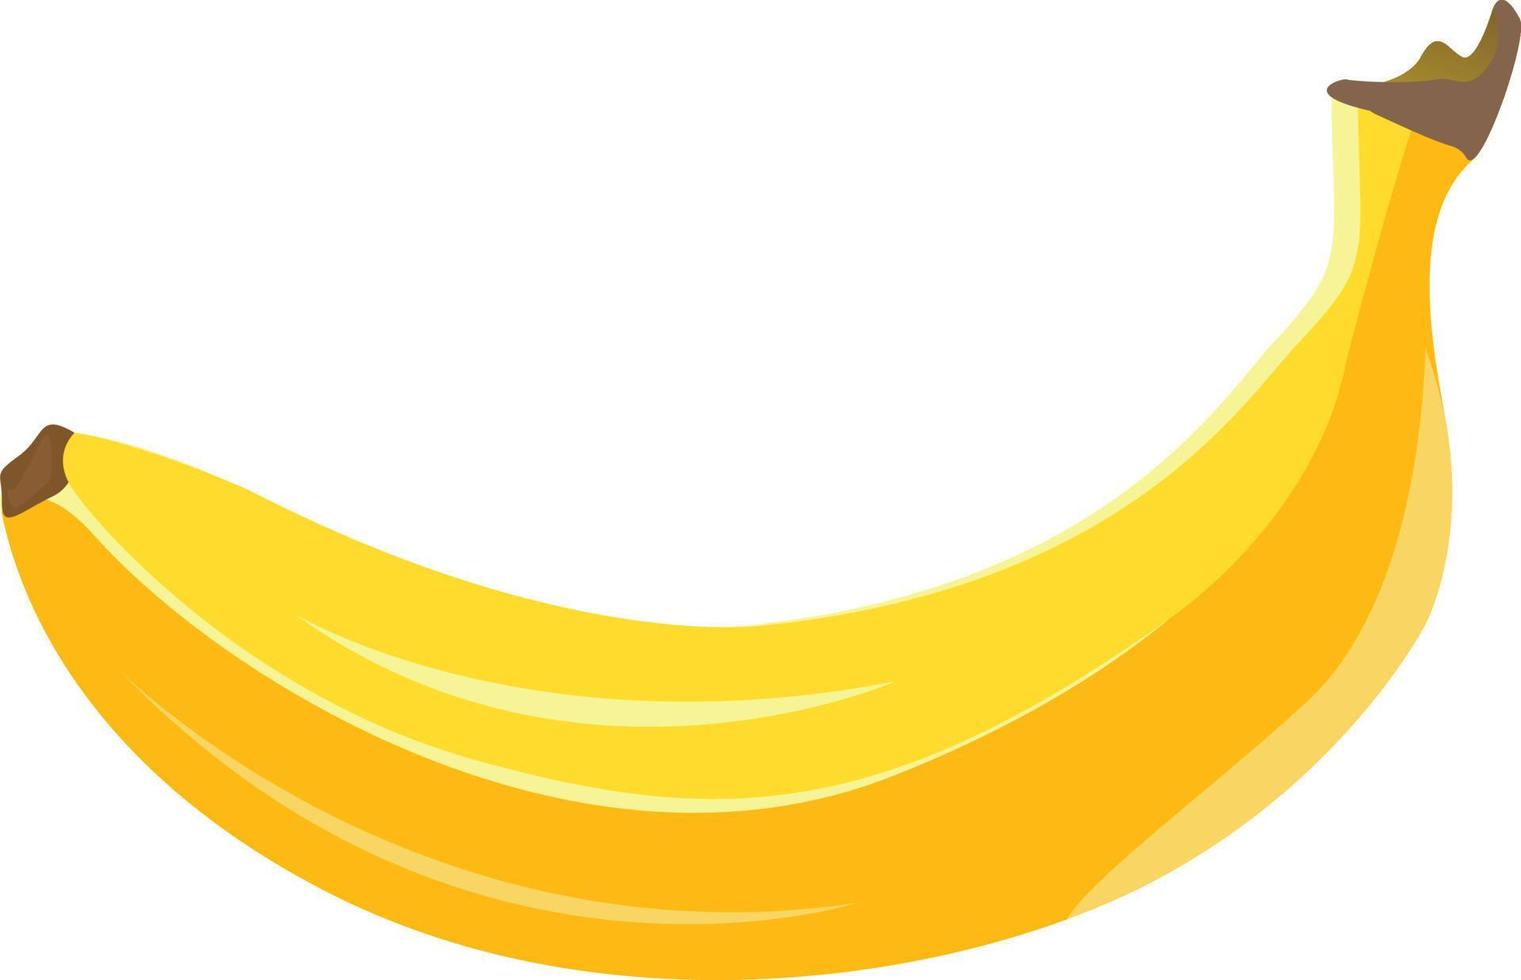 Yellow banana, illustration, vector on white background